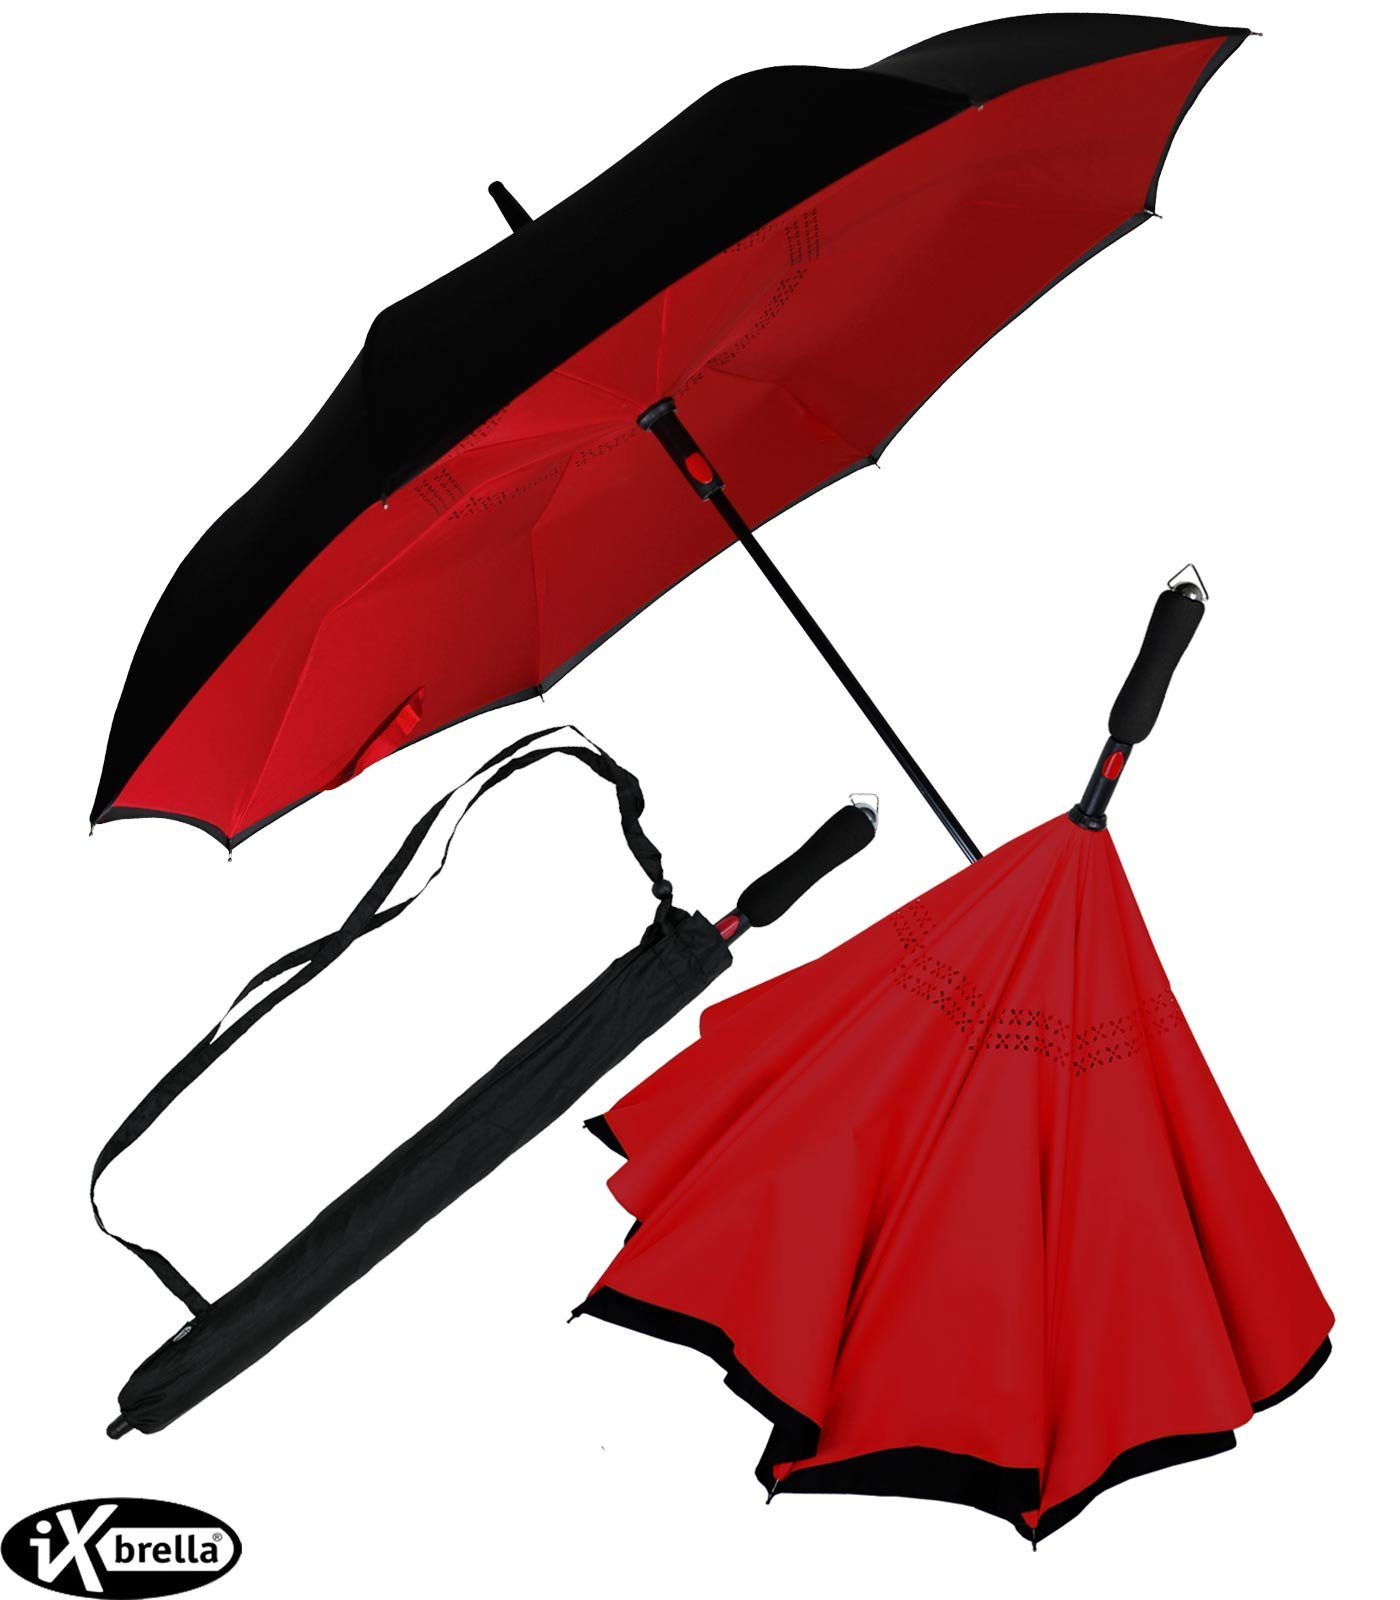 iX-brella Langregenschirm Reverse-Schirm - umgedreht zu öffnen mit Automatik, umgedreht schwarz-dunkelrot